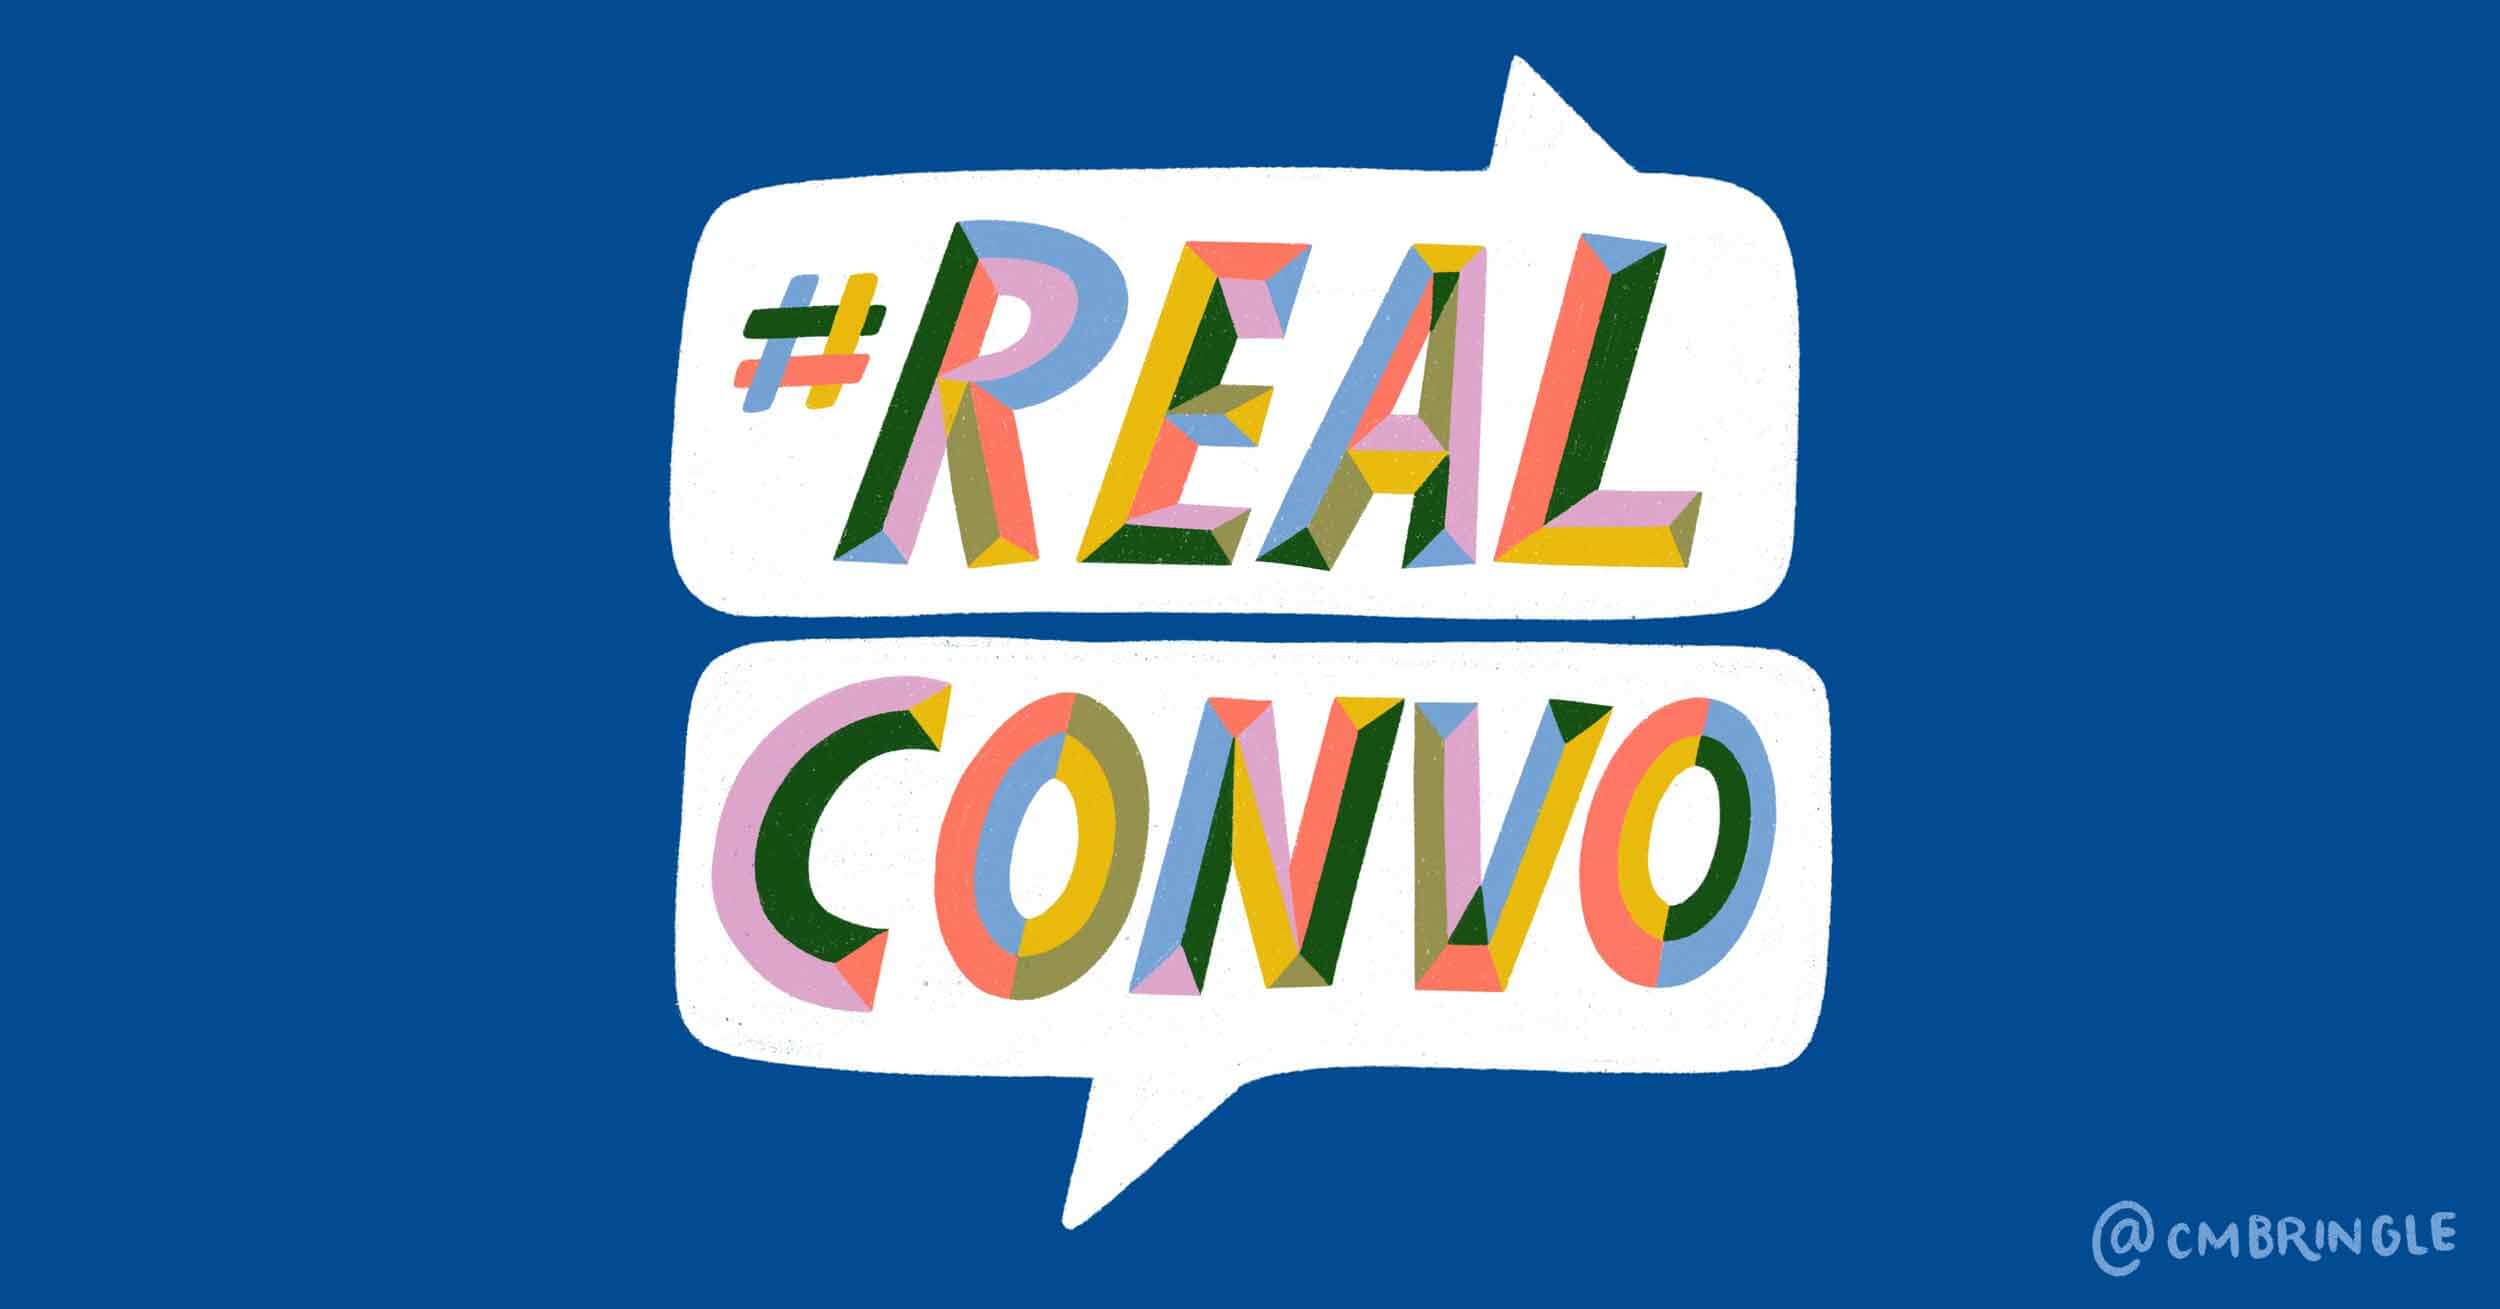 #RealConvo